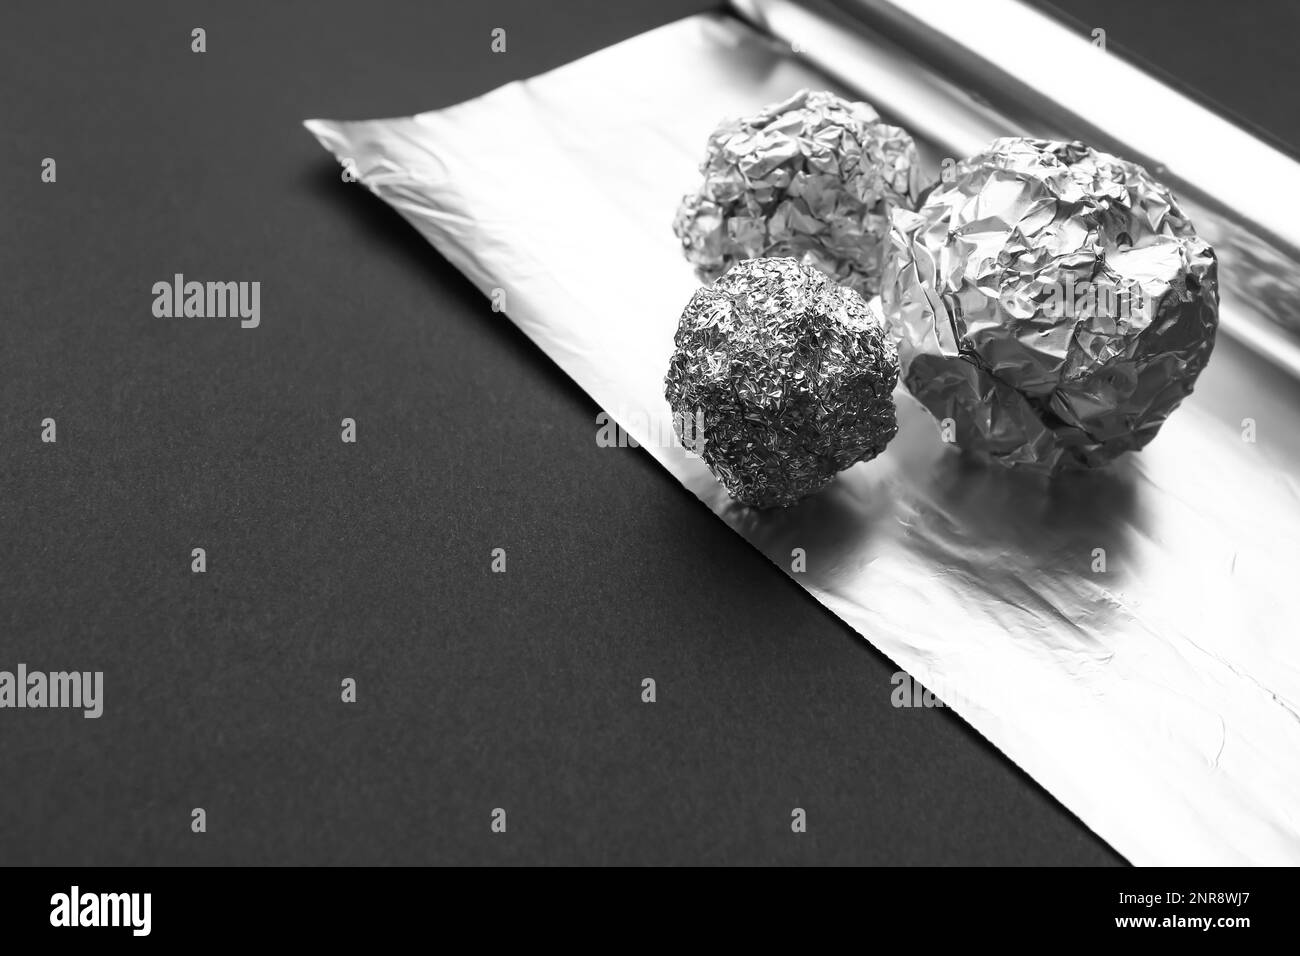 Crumpled balls of aluminium foil on dark background, closeup Stock Photo